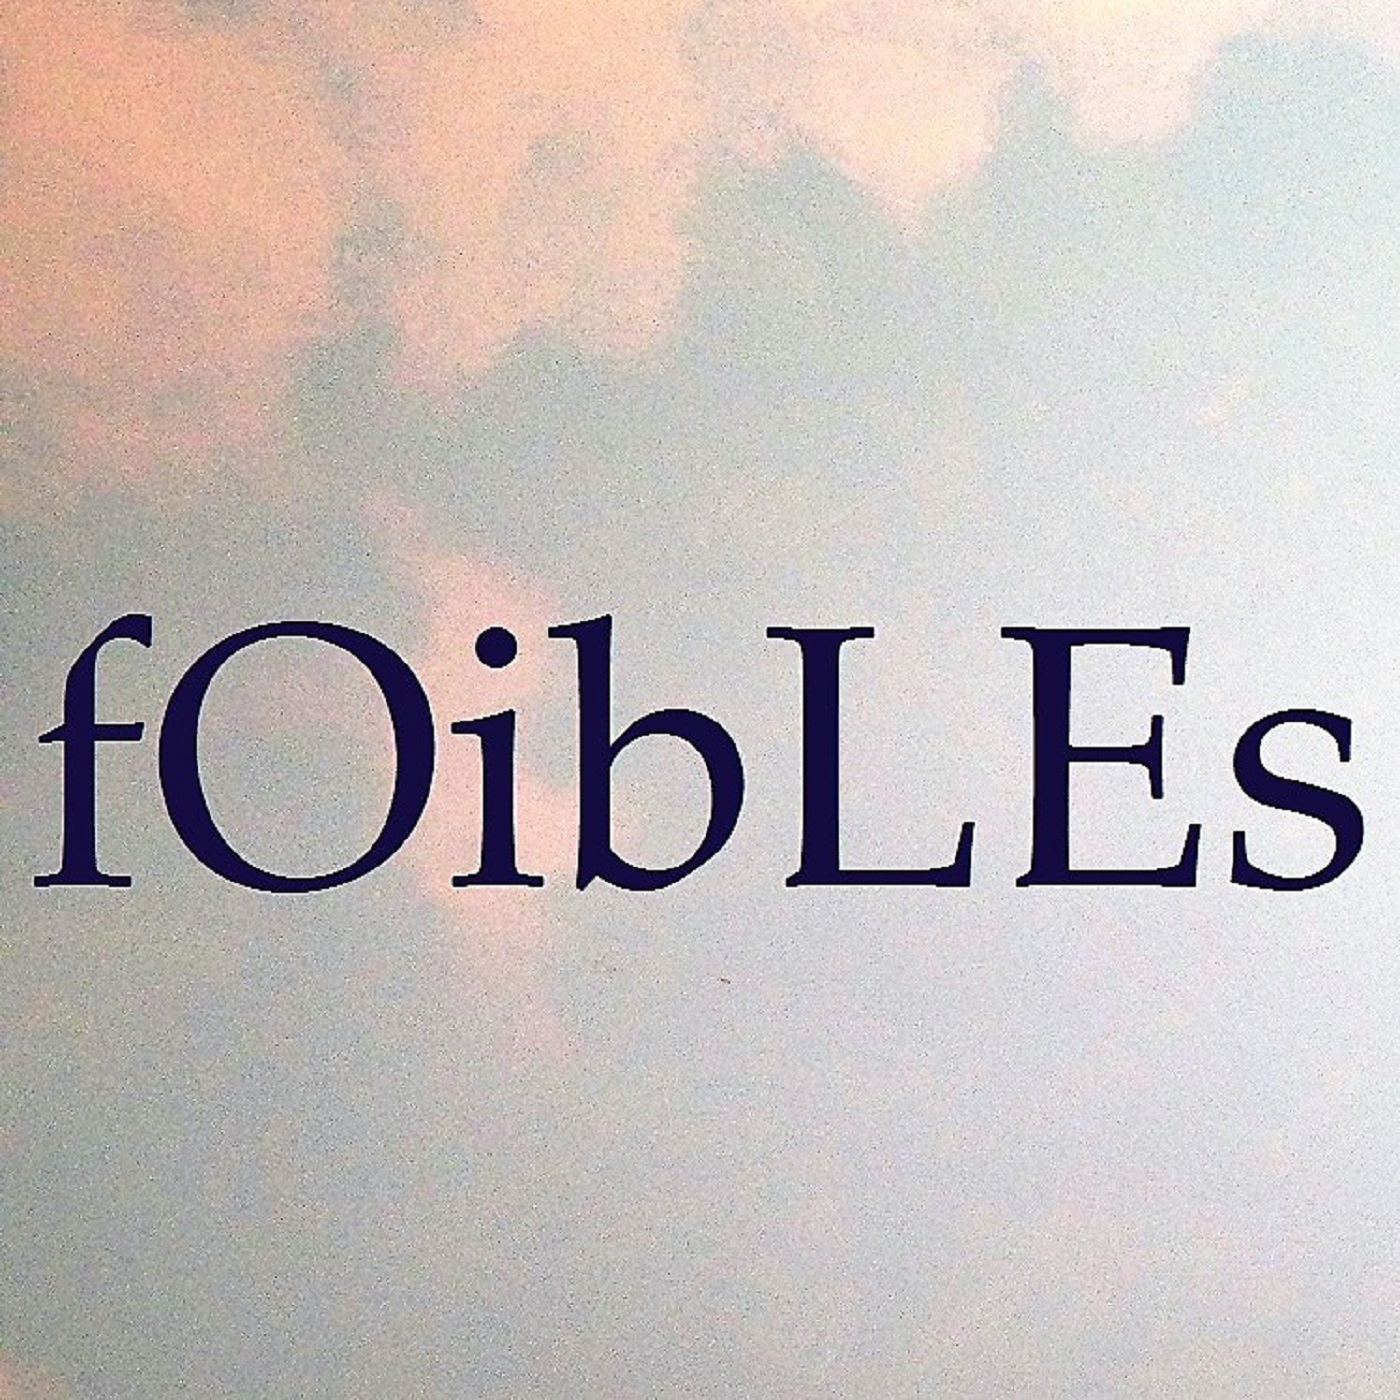 Foibles- Episode 0